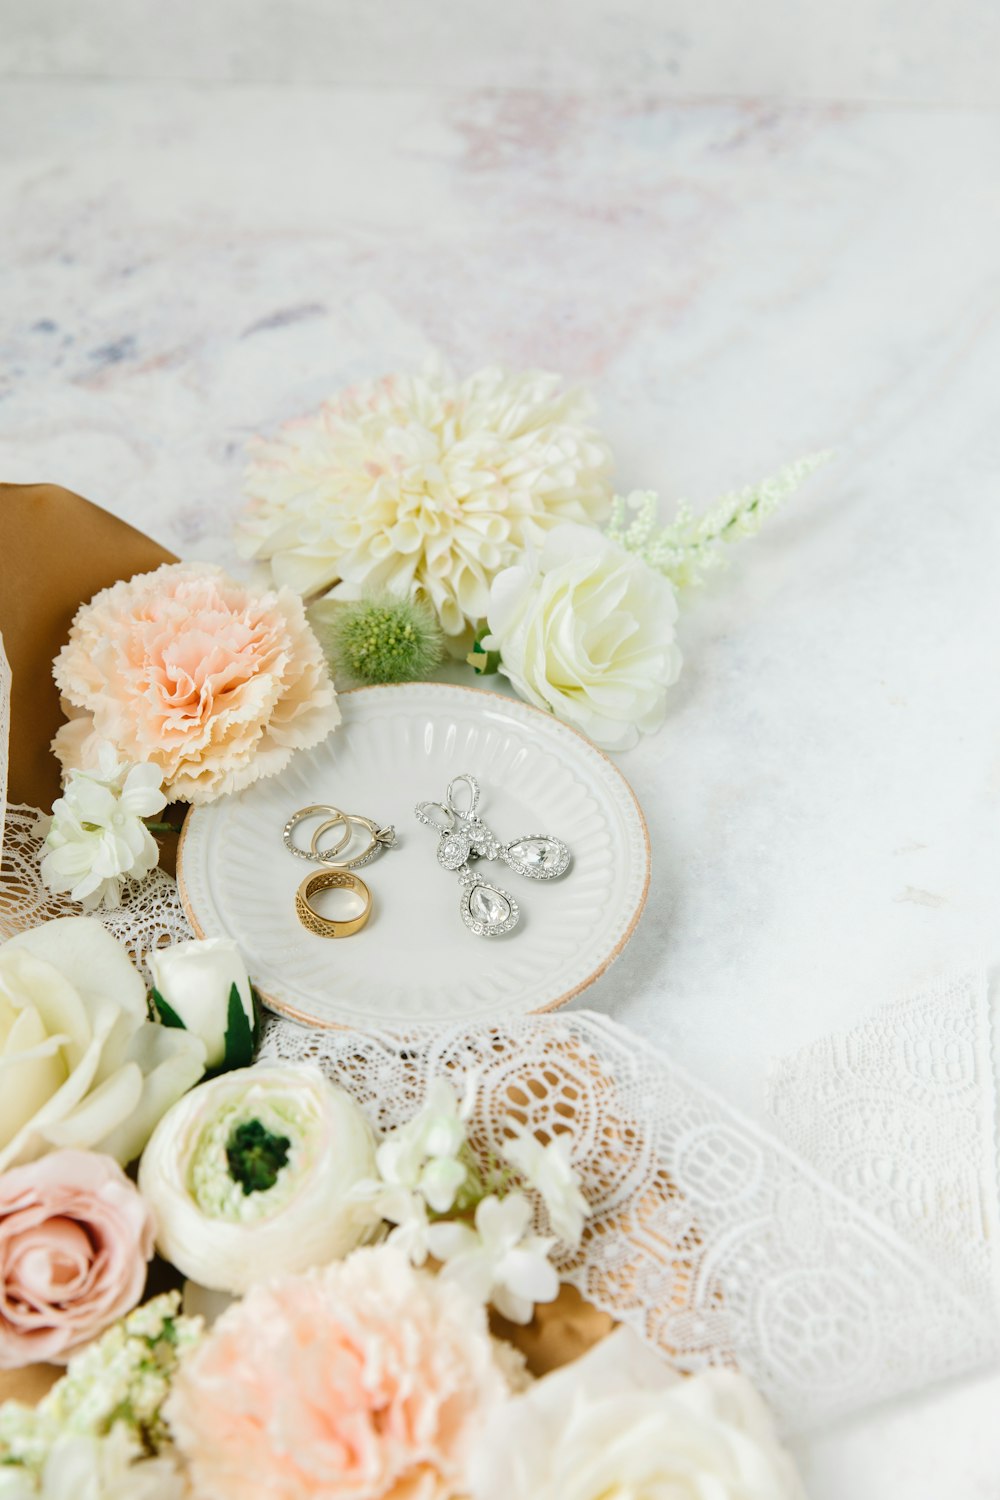 100+ Wedding Flower Pictures | Download Free Images on Unsplash